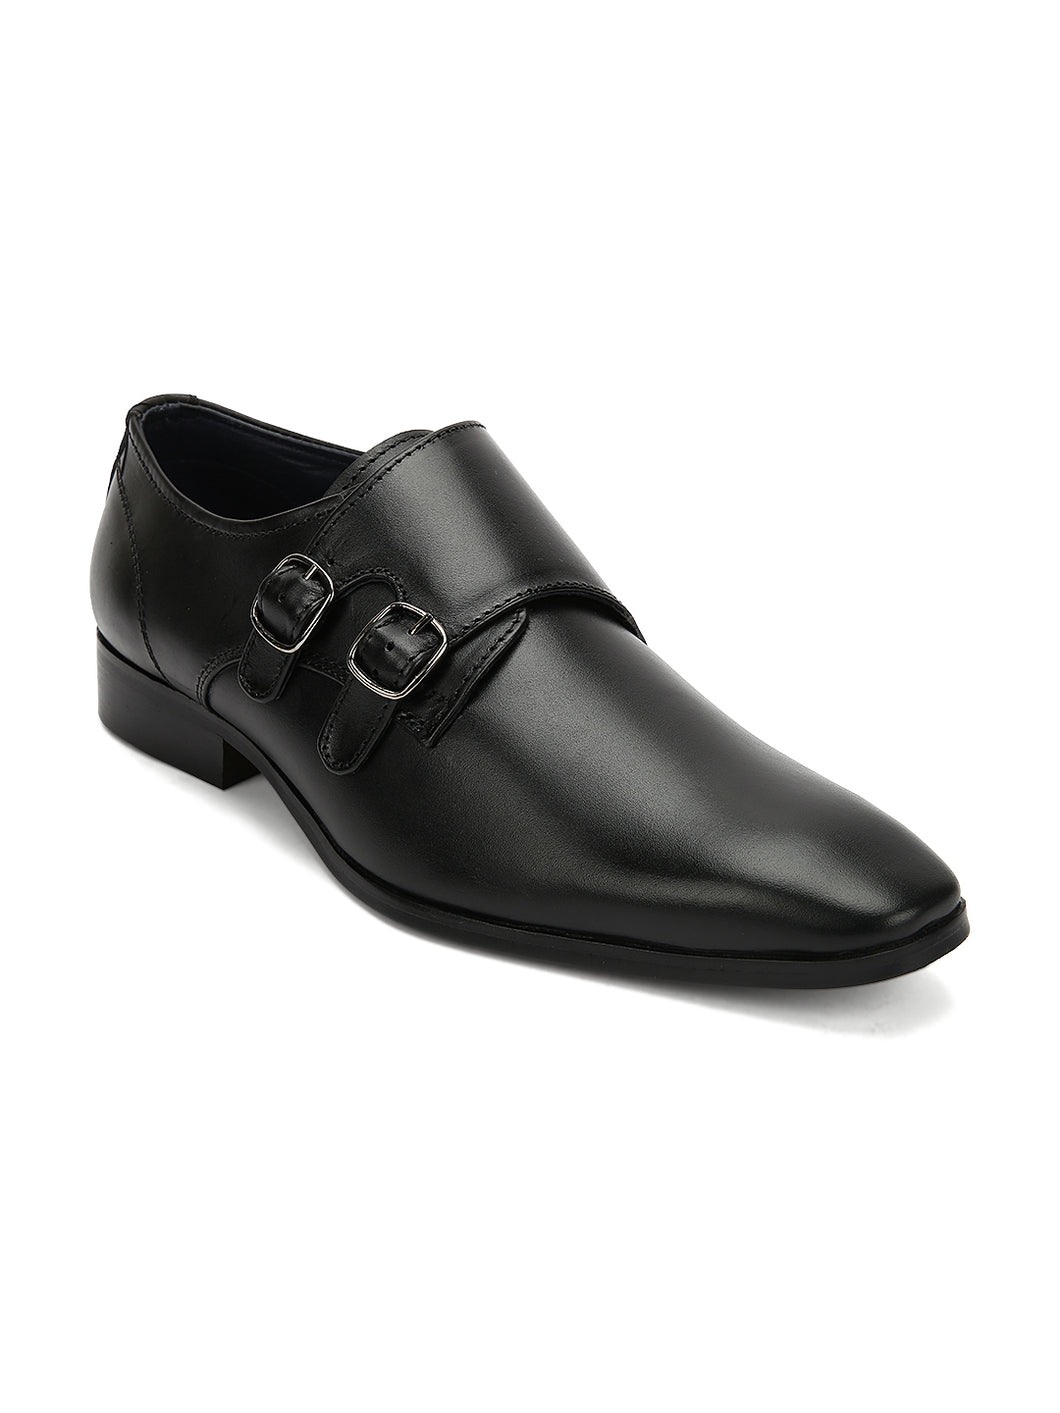 Teakwood Men Genuine Leather Double-Strap Monk Shoes